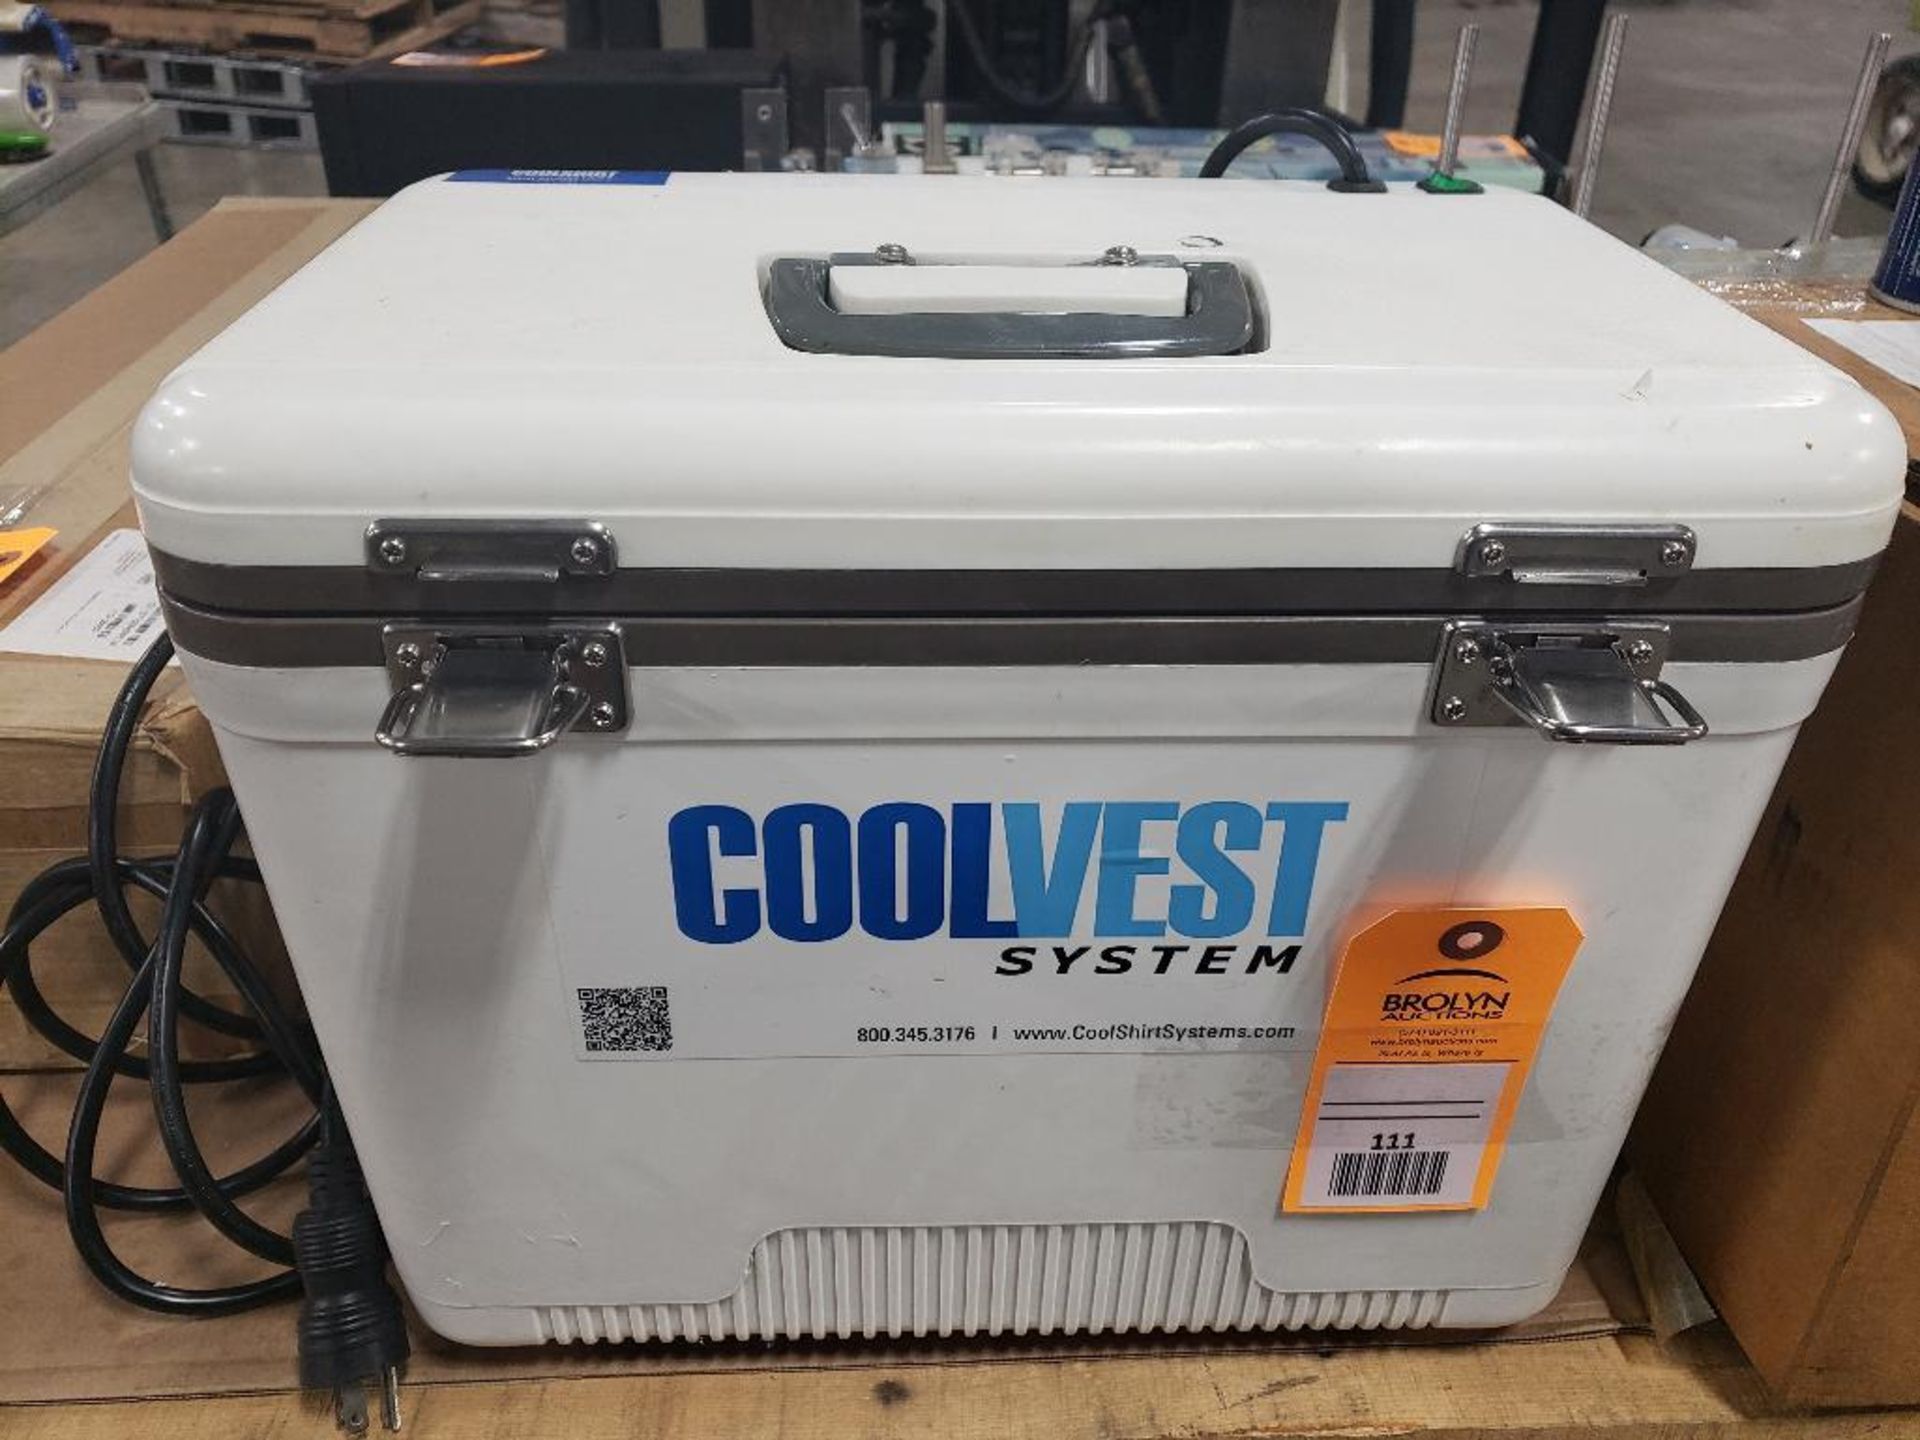 Coolvest Systems cooler.